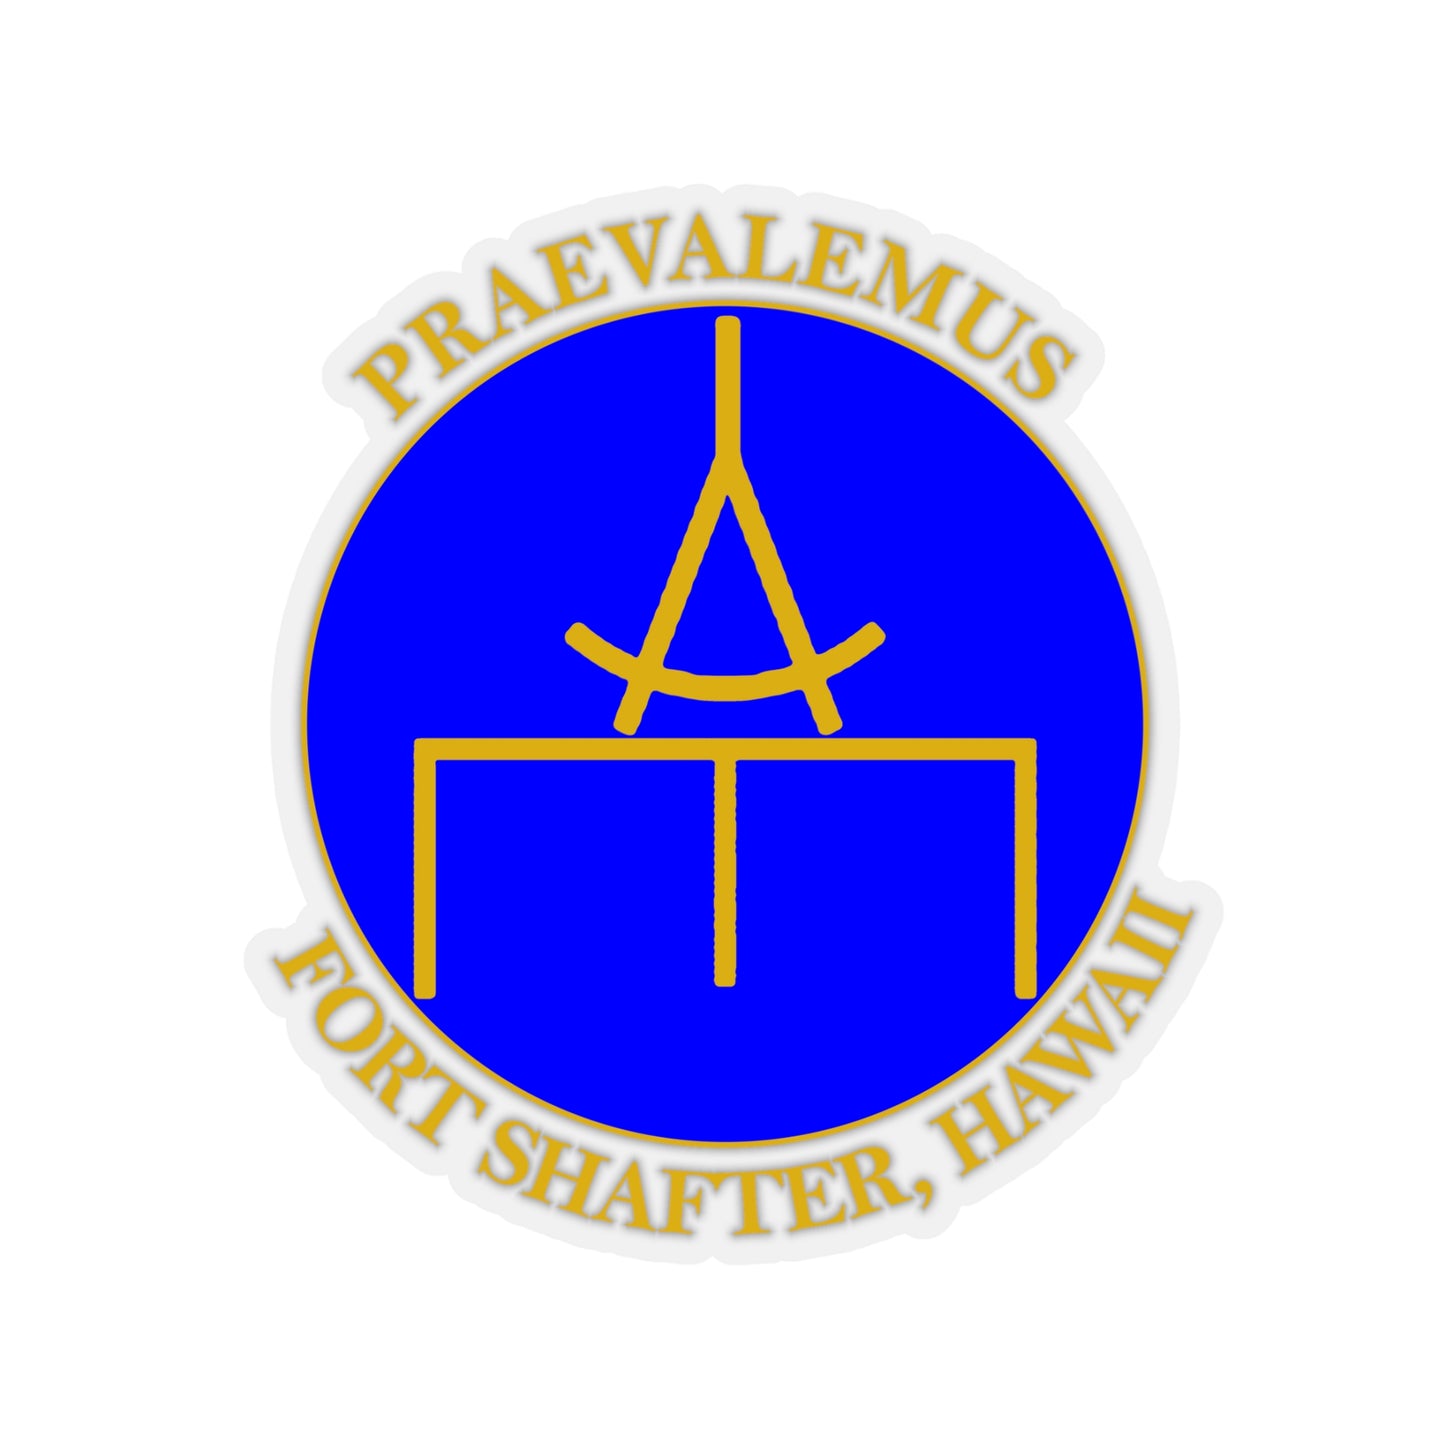 USARPAC, 5th Engineer Detachment, Geospatial Planning Cell Blue "Praevalemus" Sticker